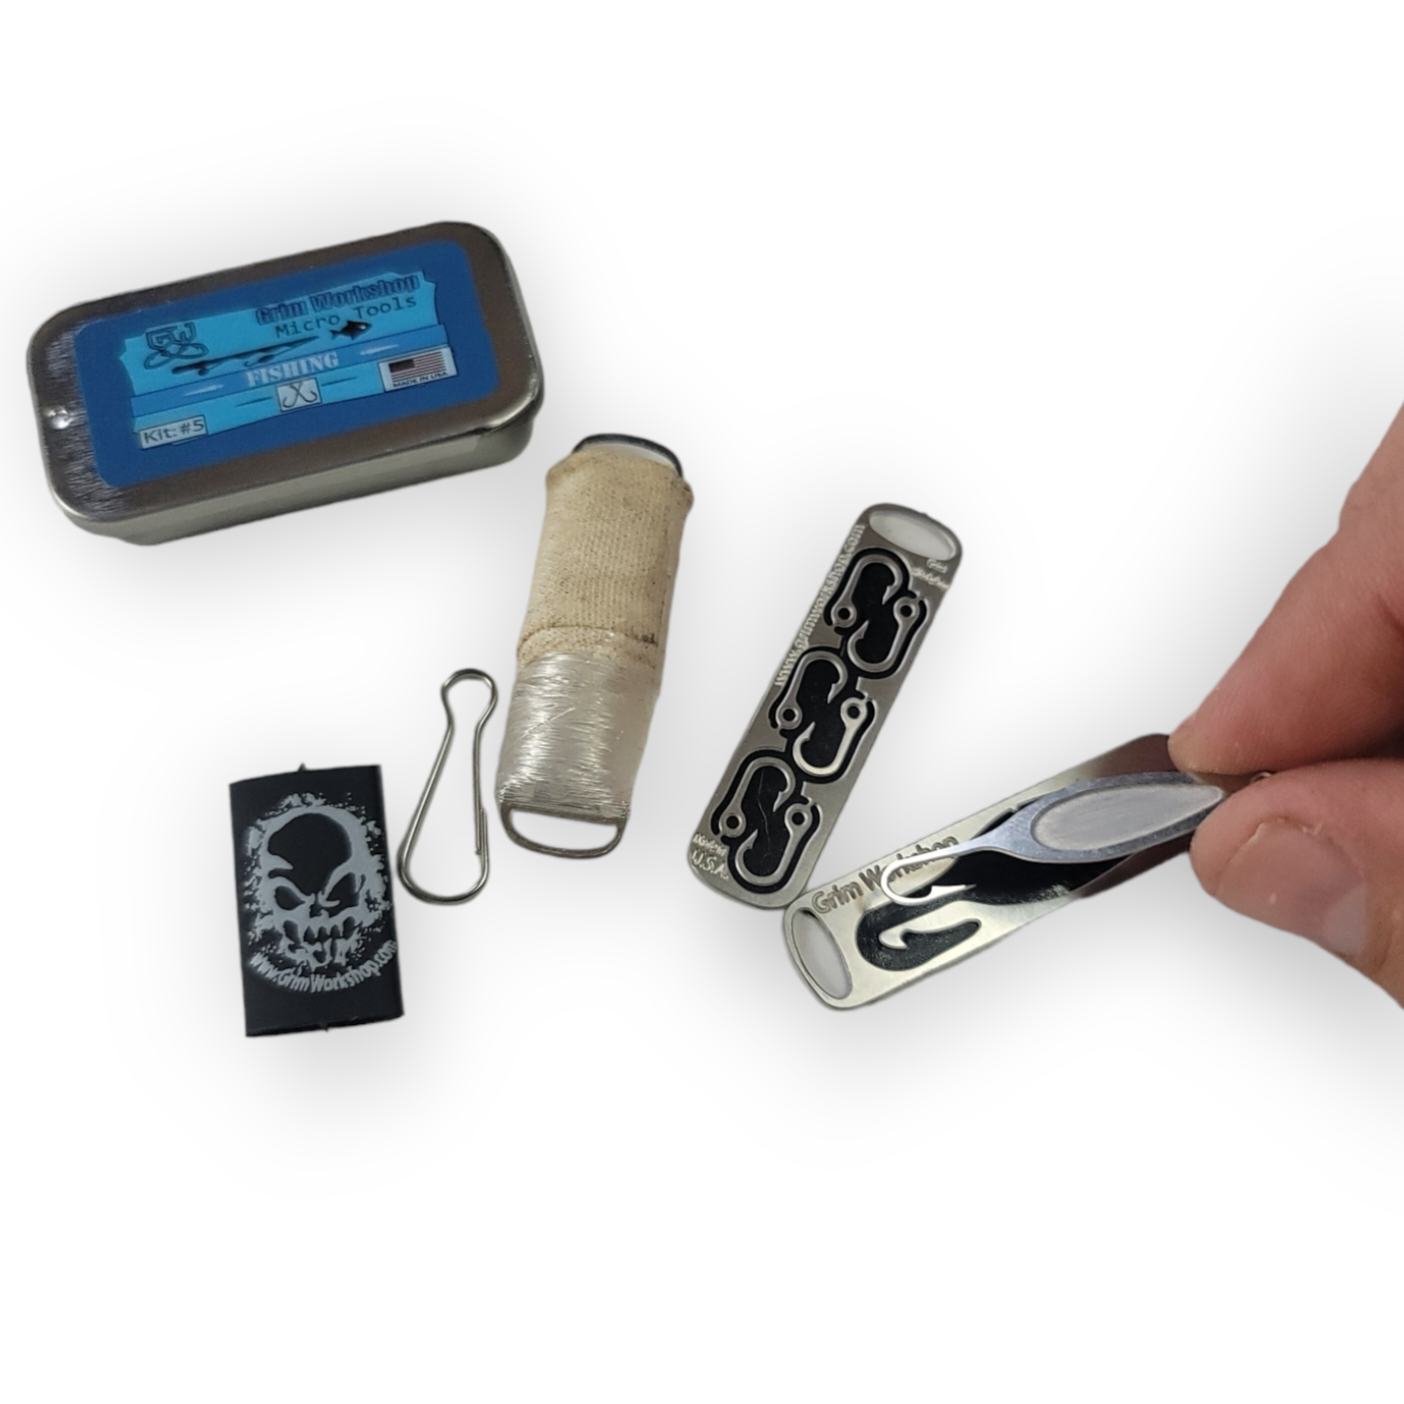 Micro Survival Fishing & Sewing Kit (microfish)